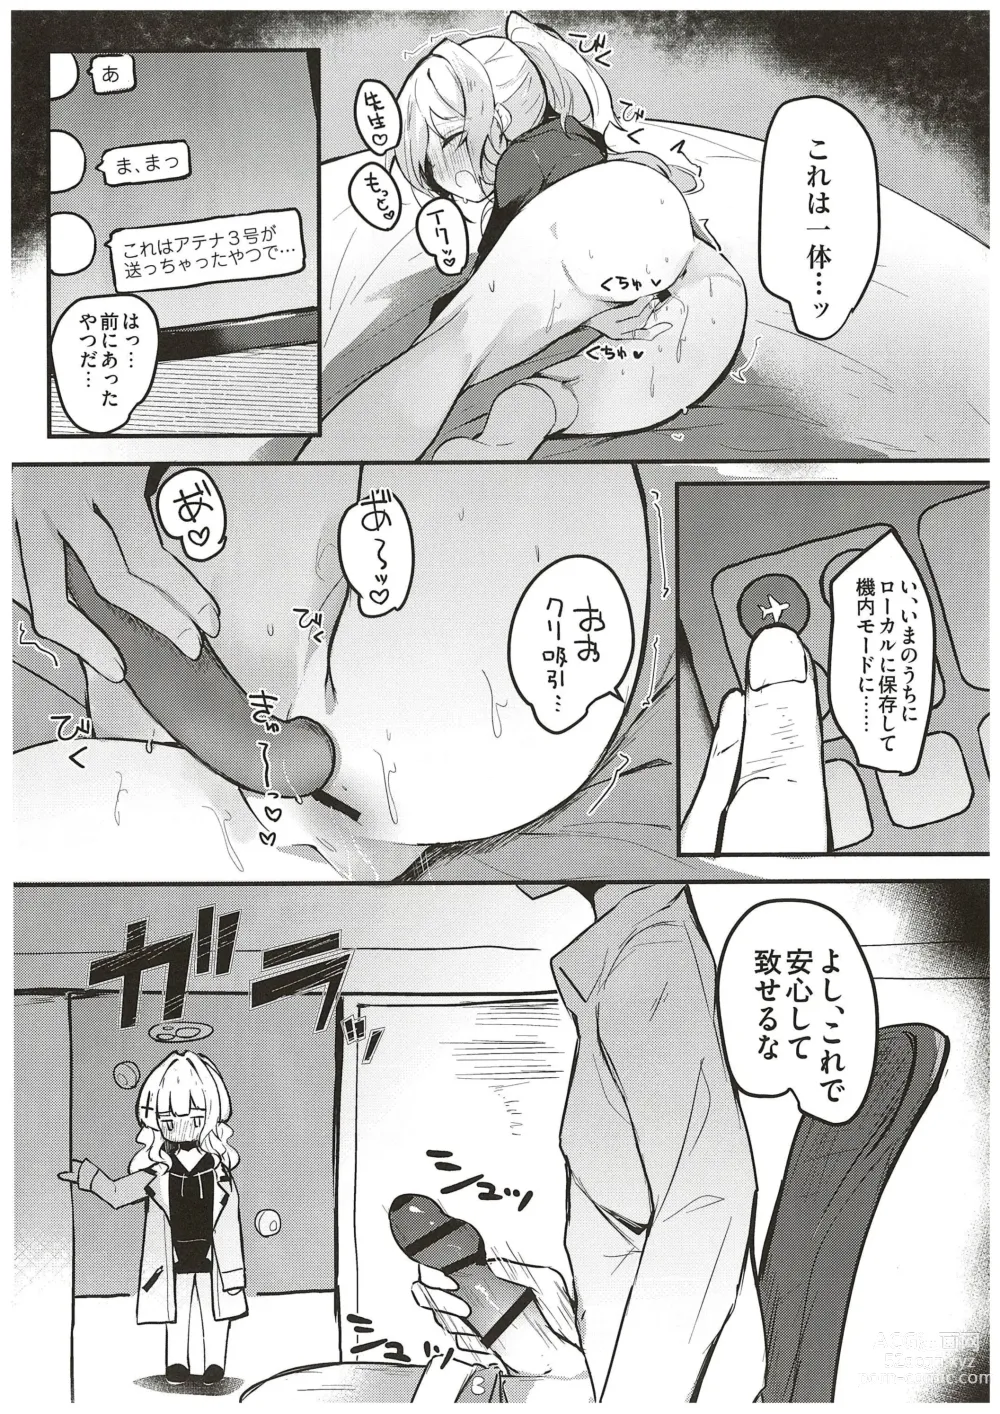 Page 4 of doujinshi Hare no Ecchi na Jidori Momotalk